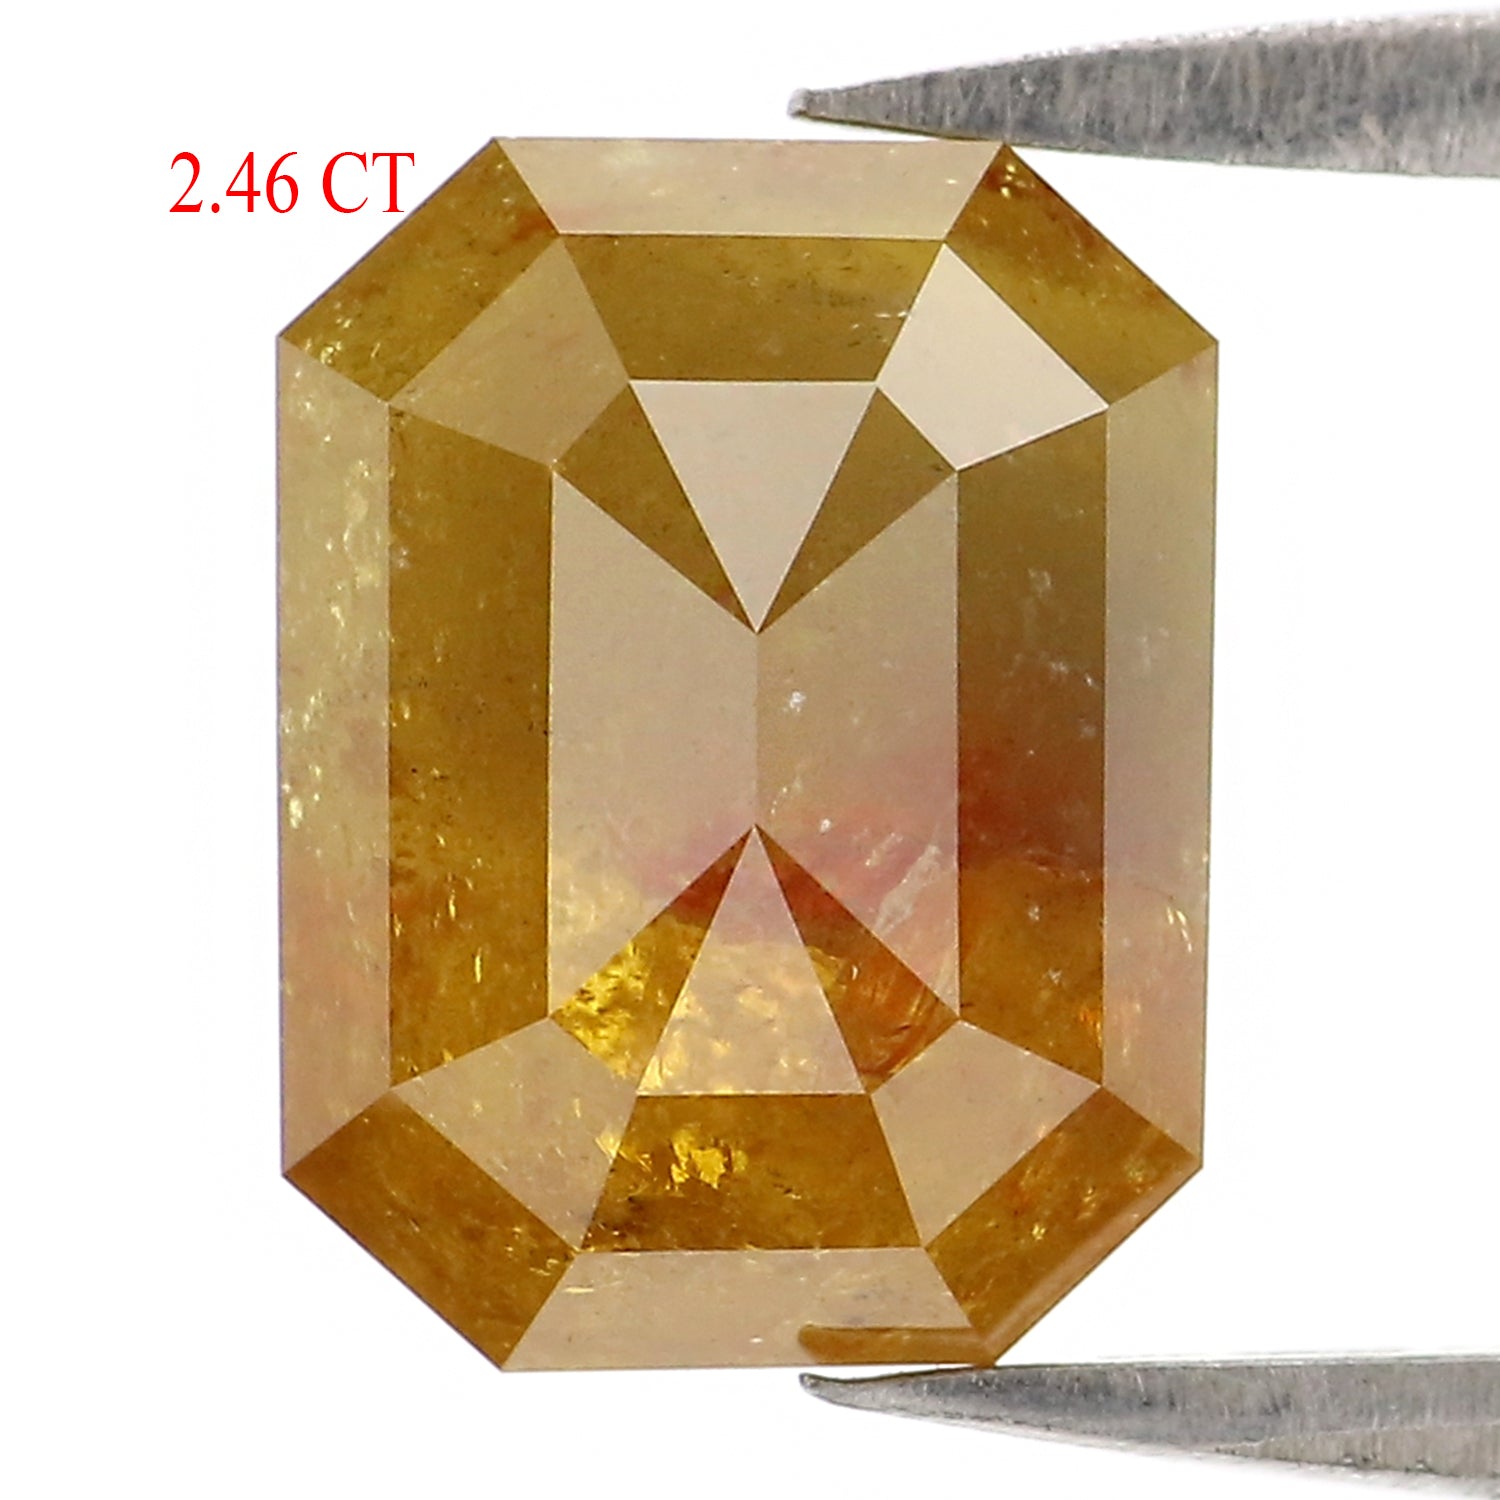 2.46 CT Natural Loose Emerald Shape Diamond Yellow Emerald Shape Diamond 8.85 MM Natural Loose Yellow Color Emerald Rose Cut Diamond LQ2947